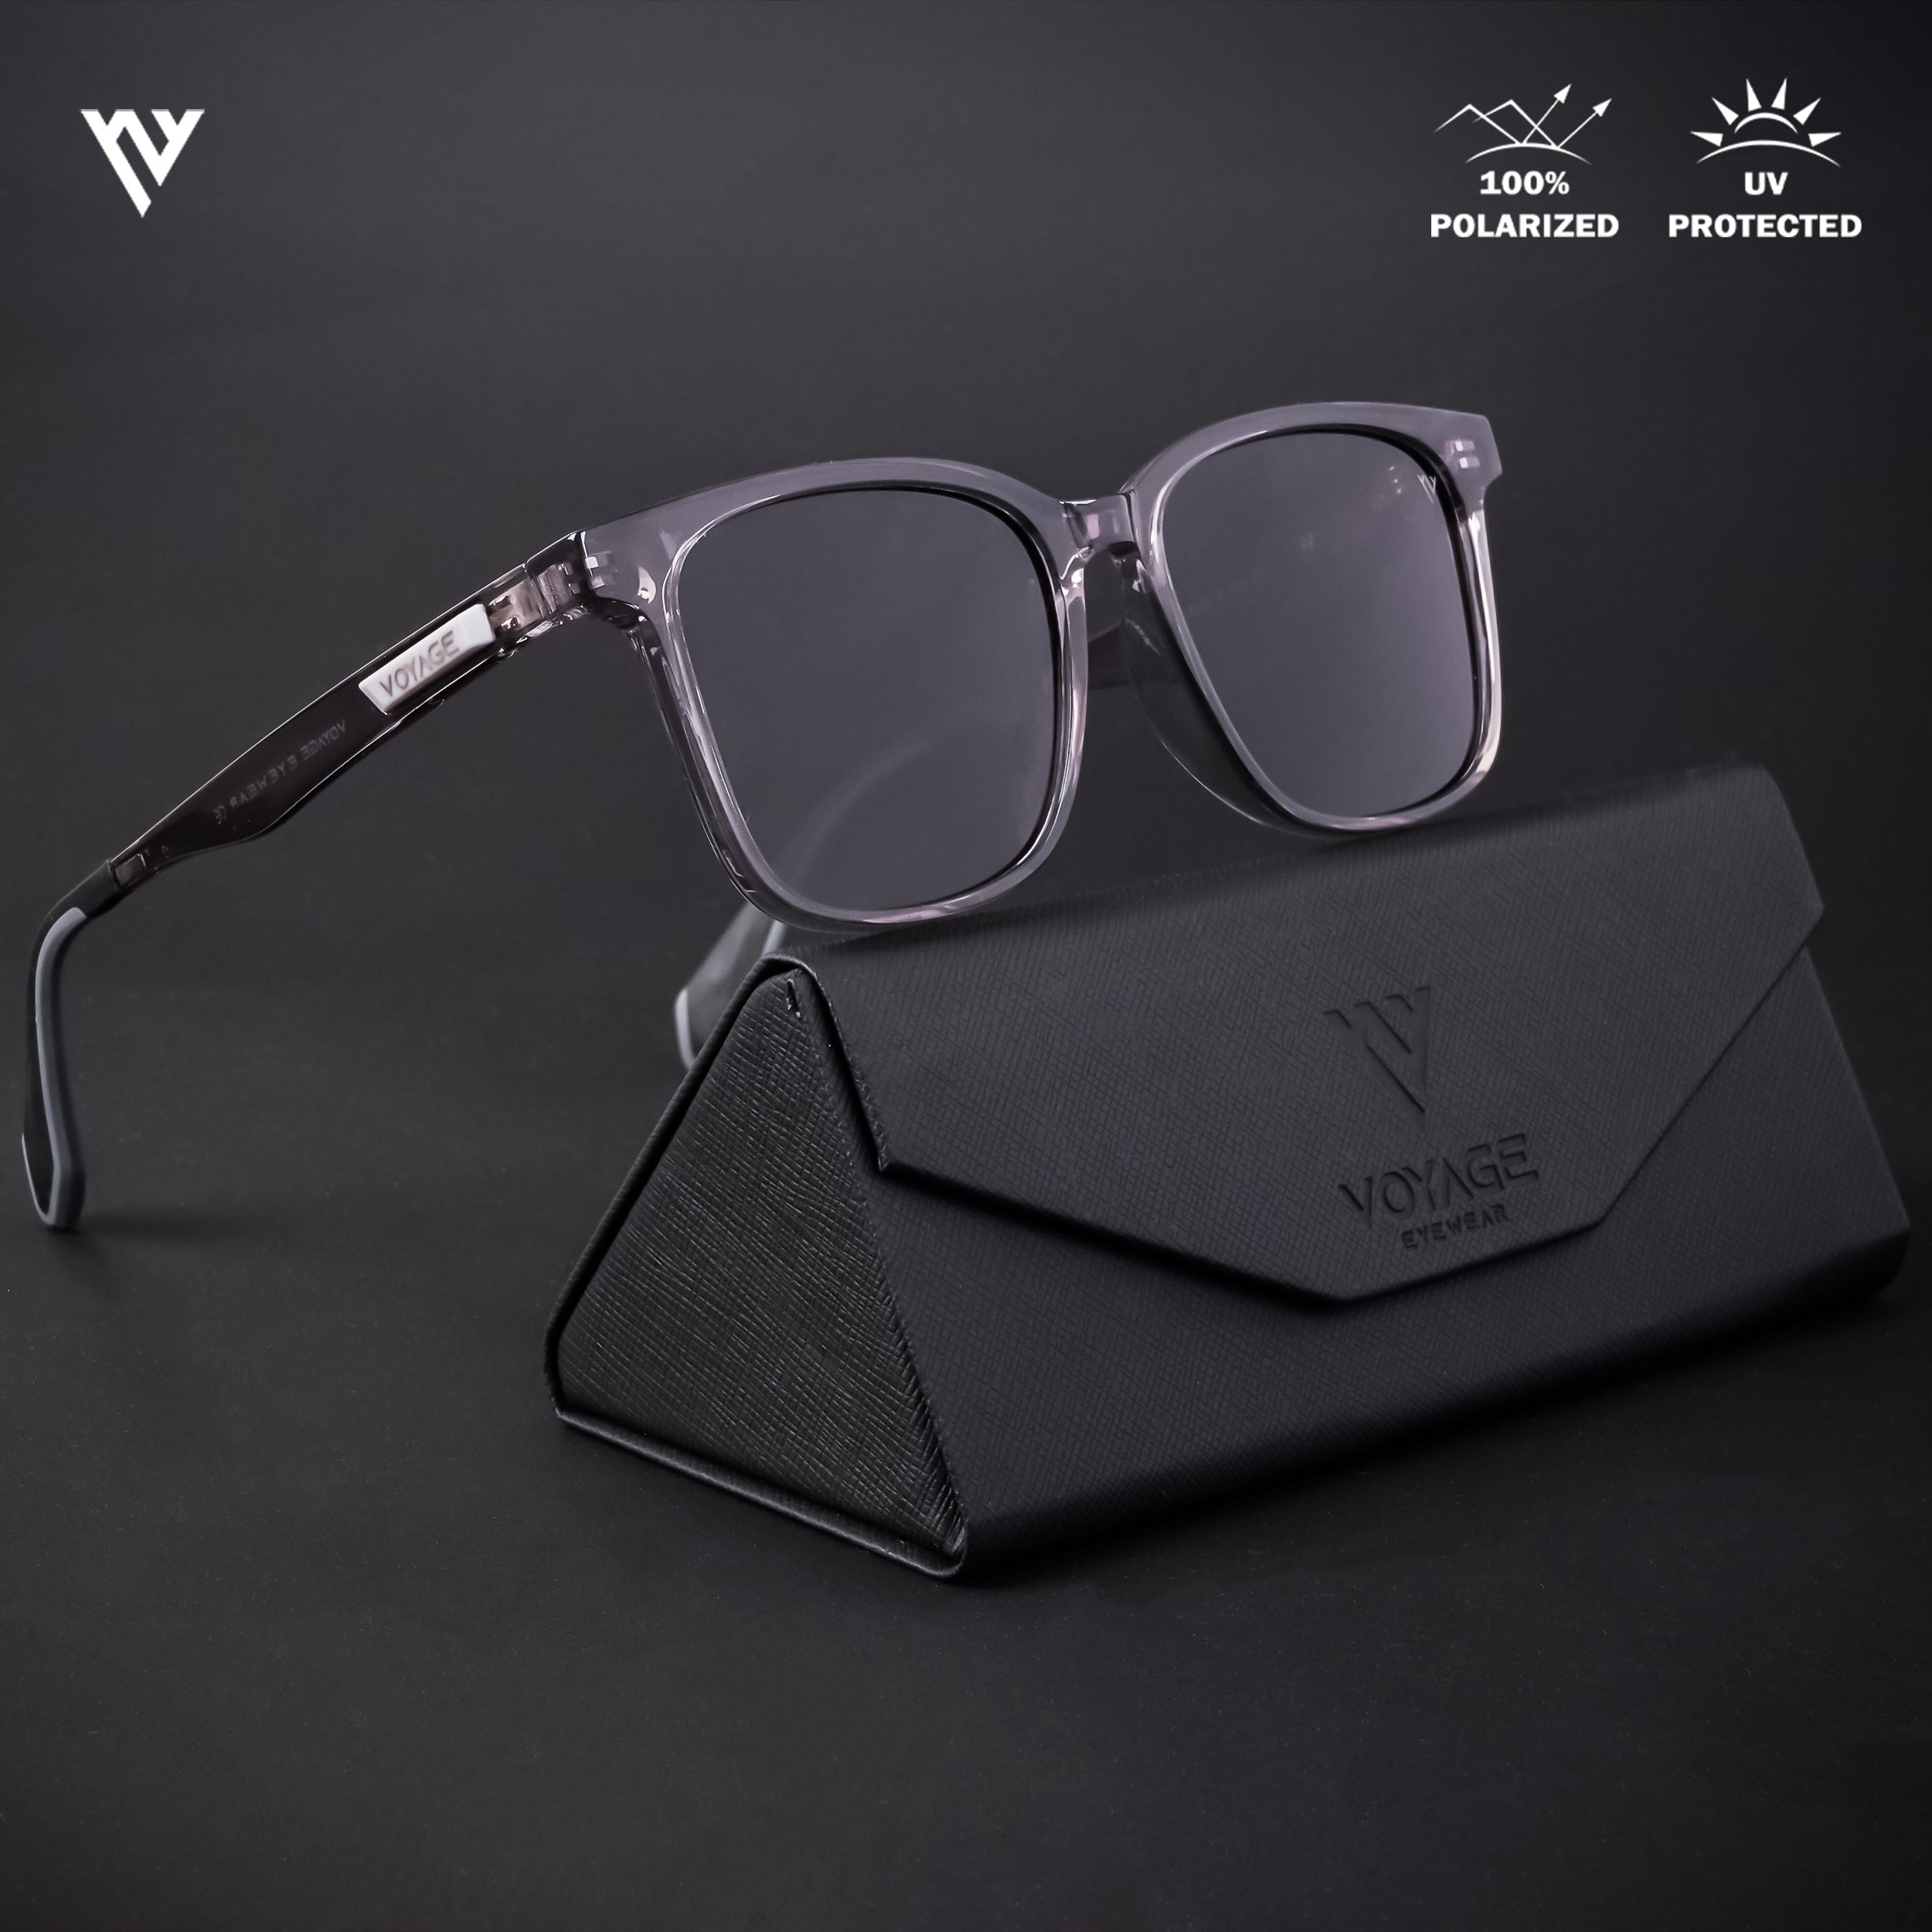 Voyage Active Grey Polarized Wayfarer Sunglasses for Men & Women - PMG4460